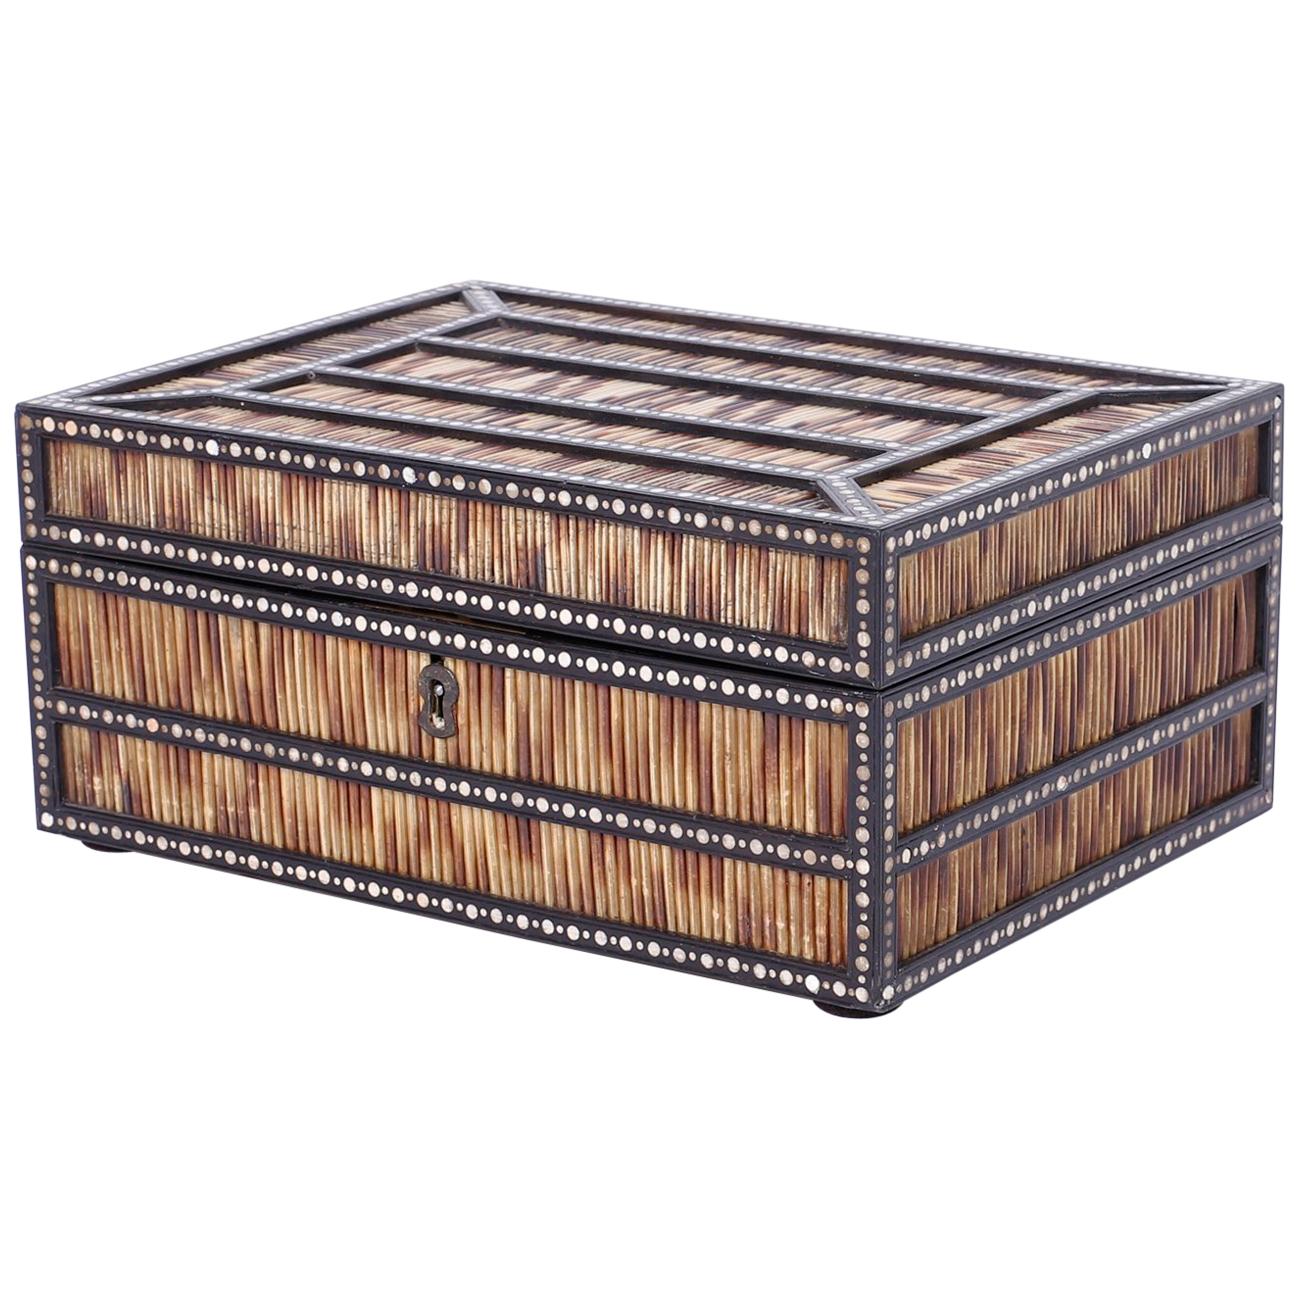 Quill box Vintage Box Vintage Wood Box